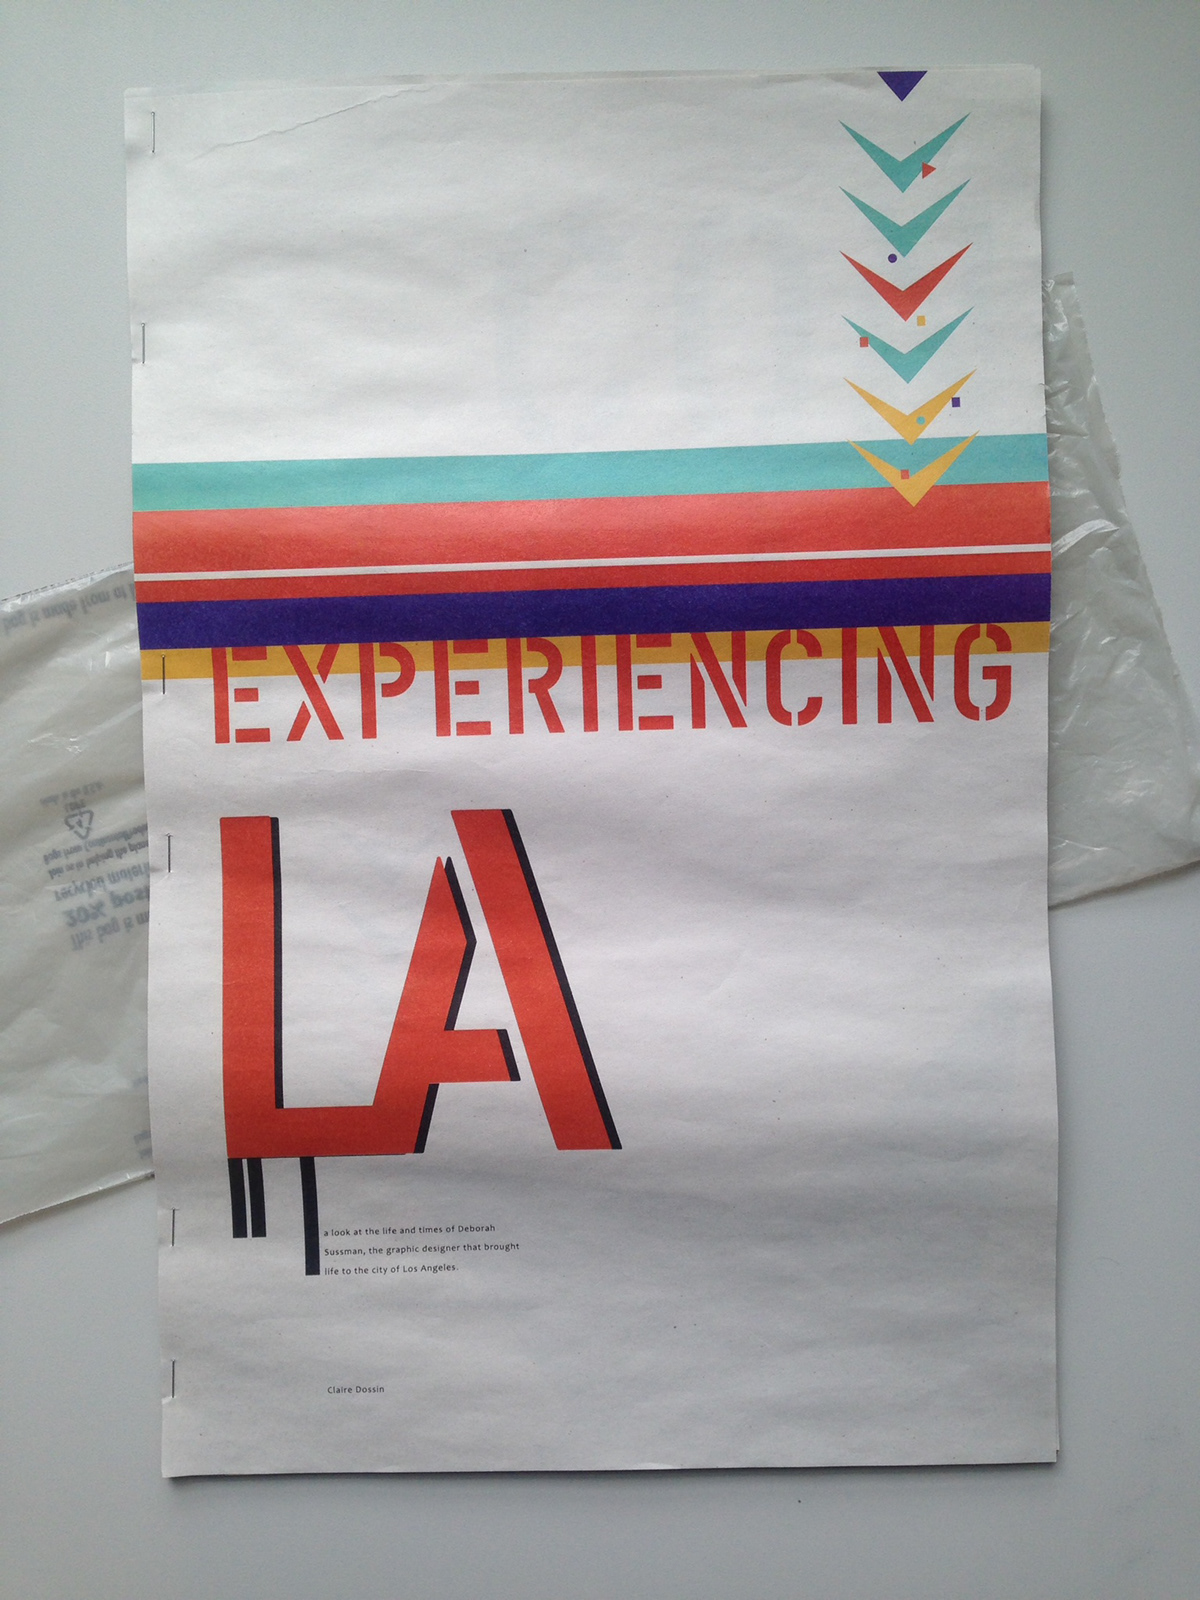 deborah sussman 1984 Olympics color shape newspaper newsprint design book Los Angeles sussman local la paper Olympics